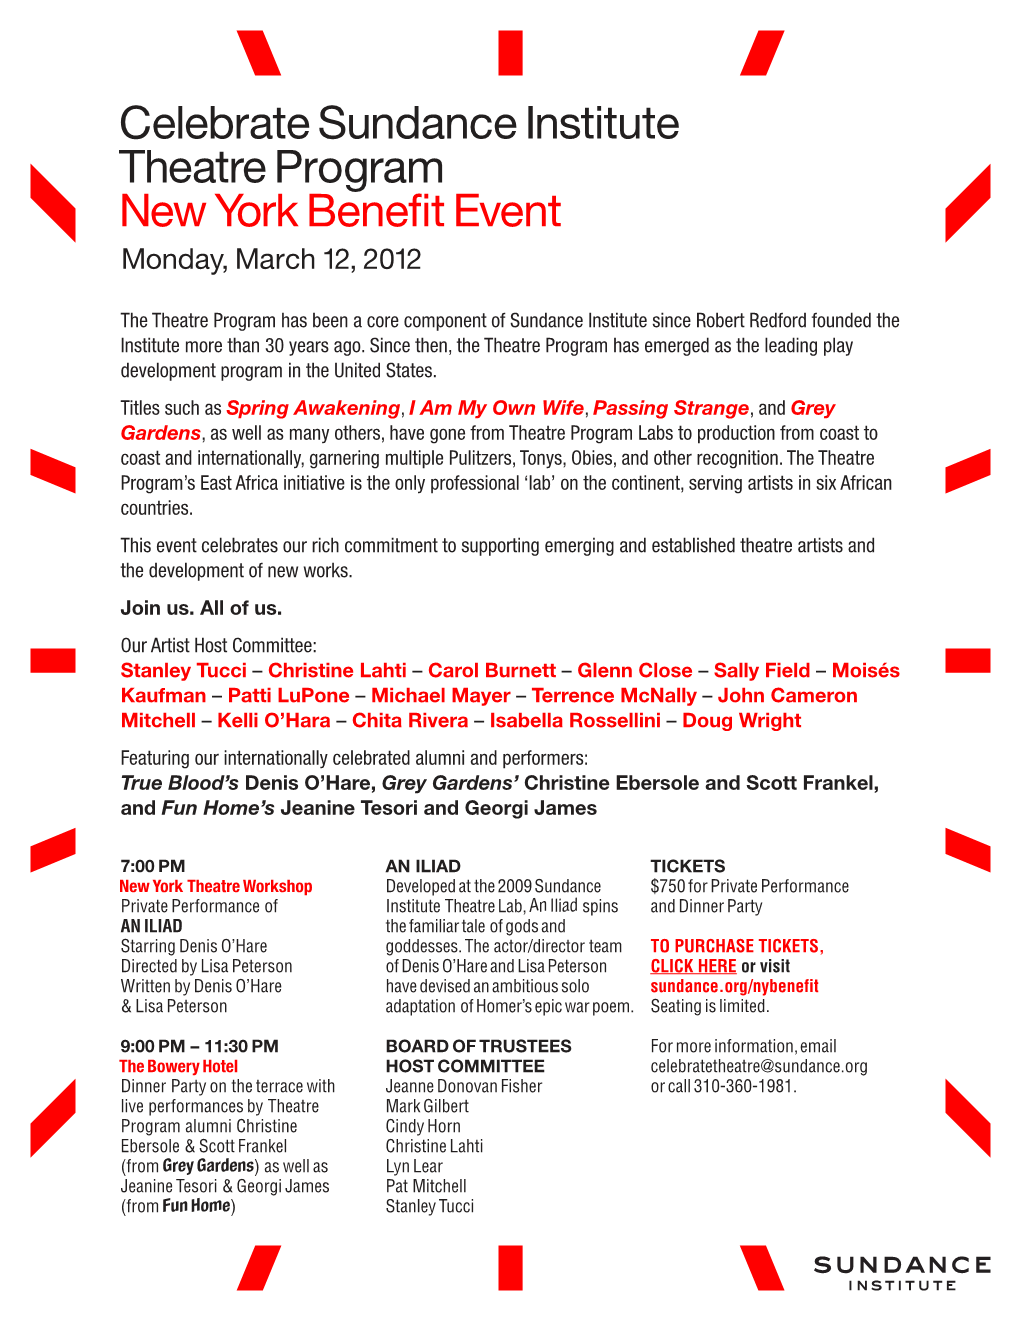 Celebrate Sundance Institute Theatre Program New York Benefit Event Monday, March 12, 2012